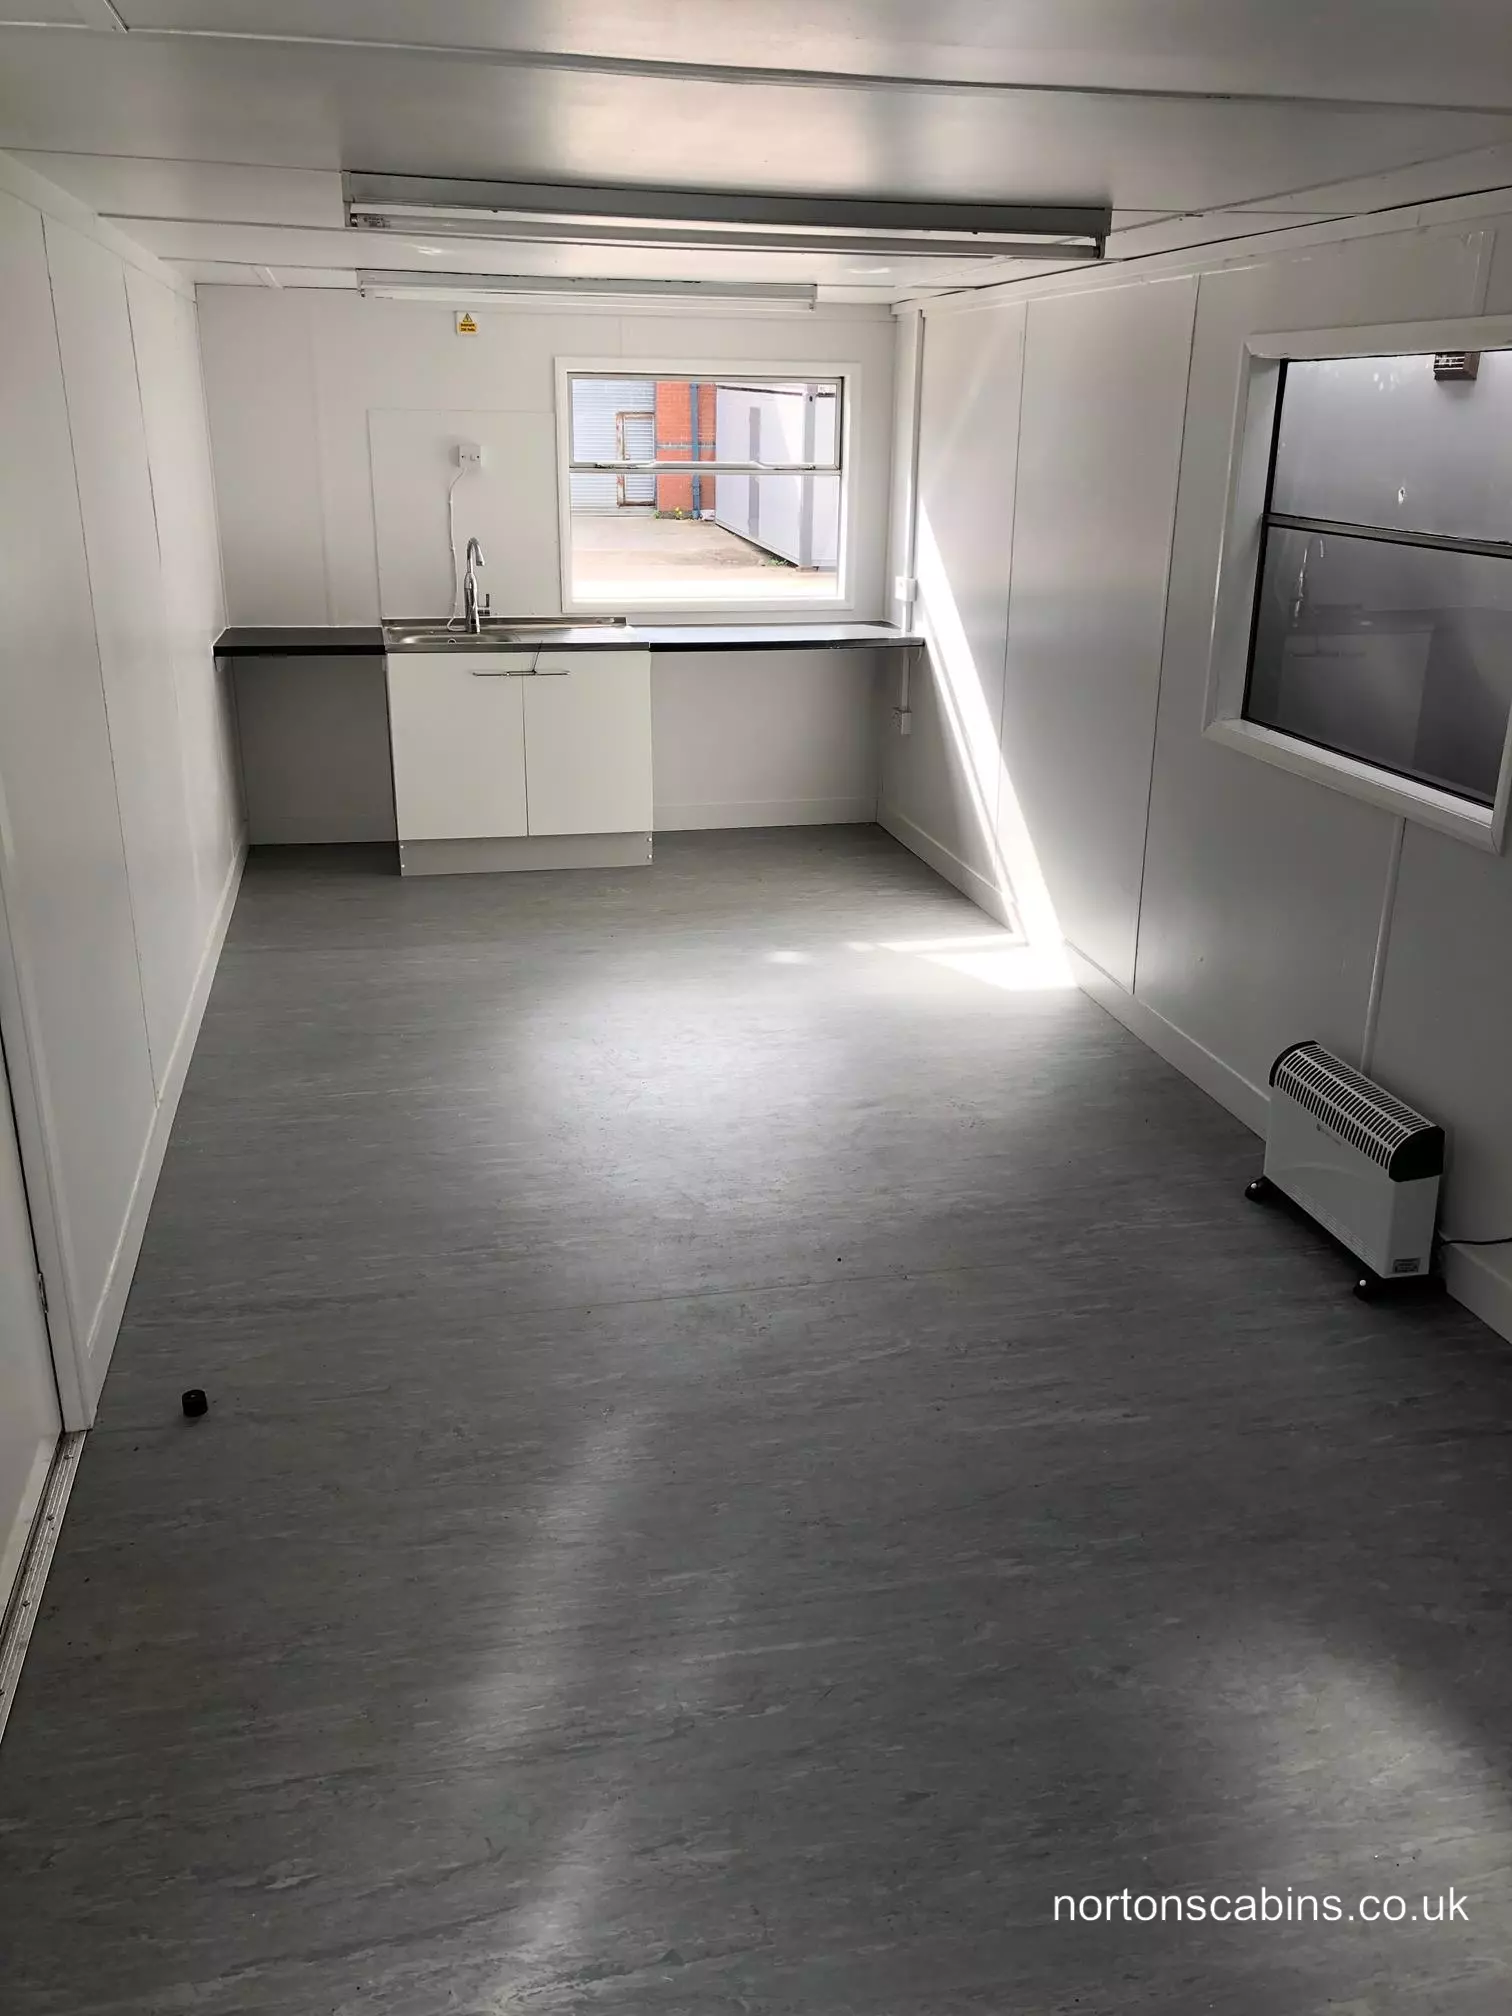 Ref: Nor240 32x 10ft Office kitchen £8,500 +VAT